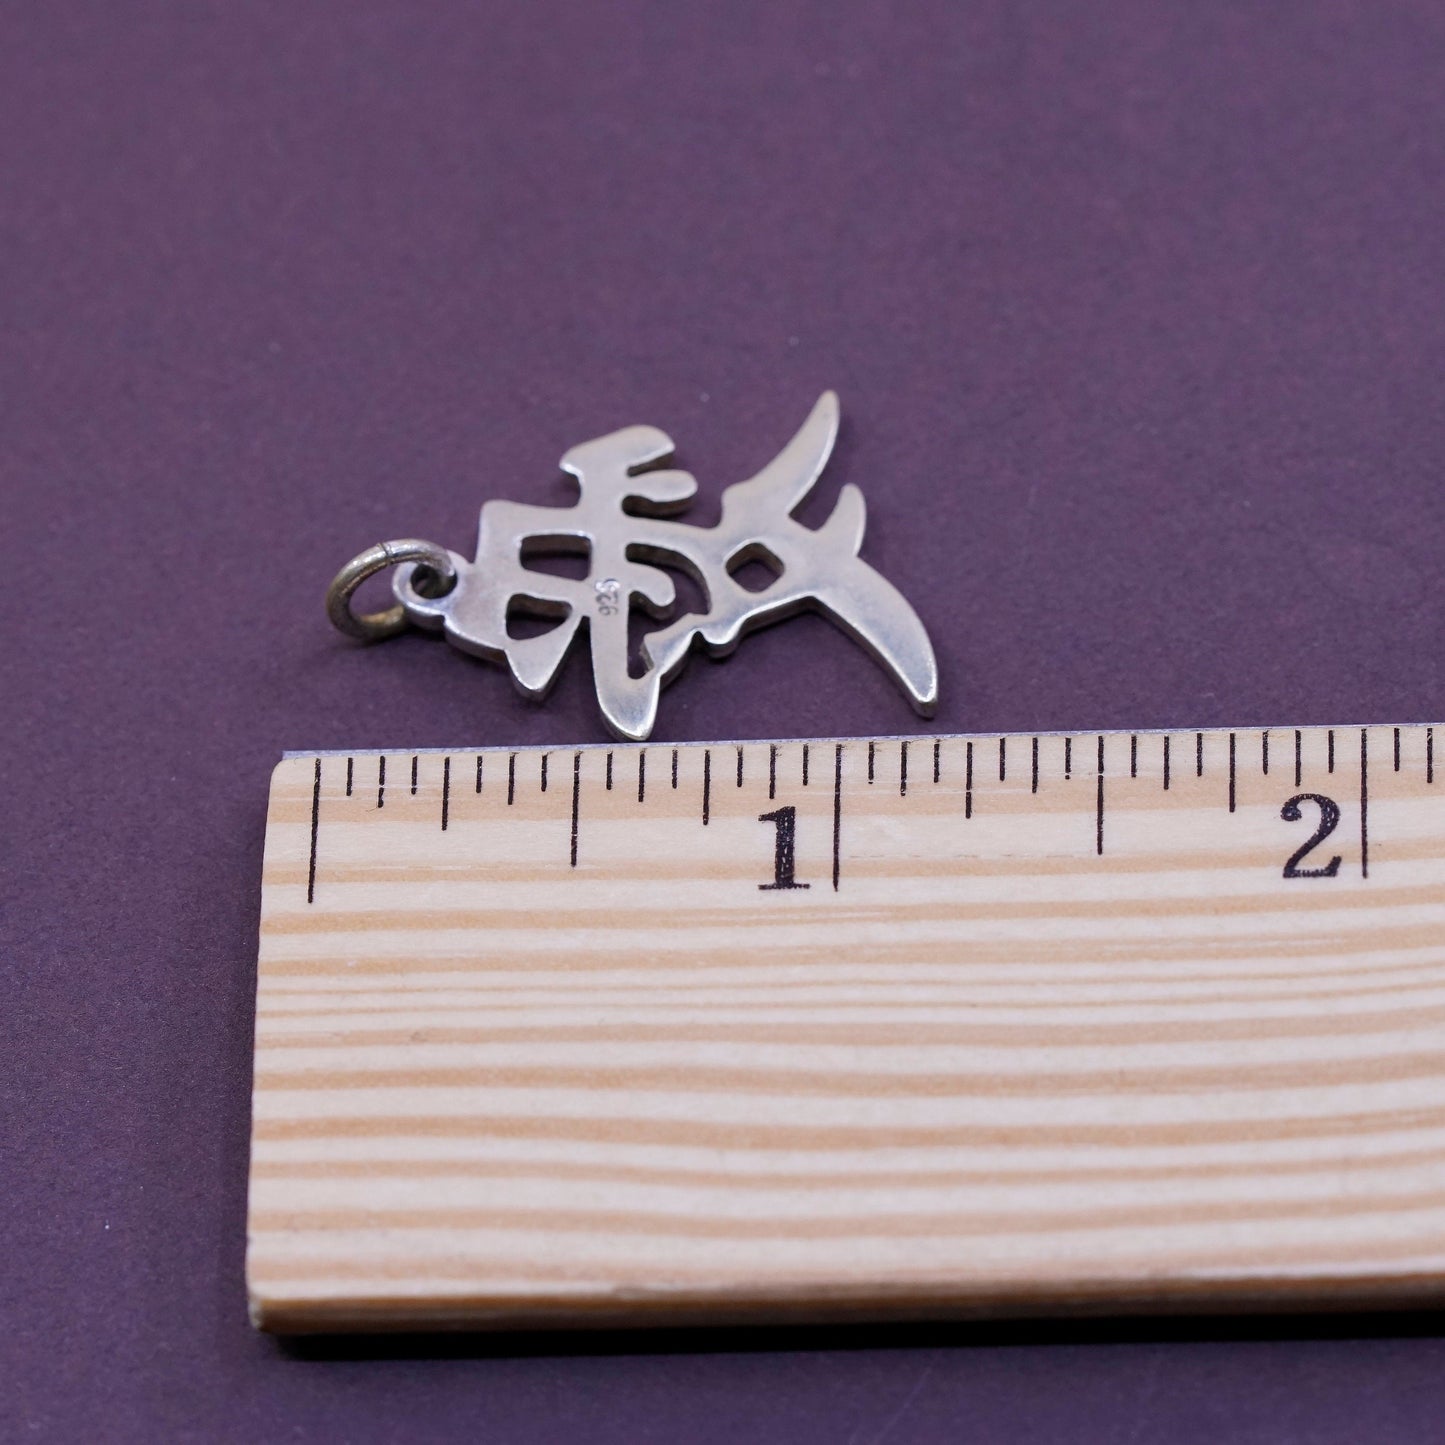 vtg Sterling 925 silver handmade pendant, Chinese character charm “love”